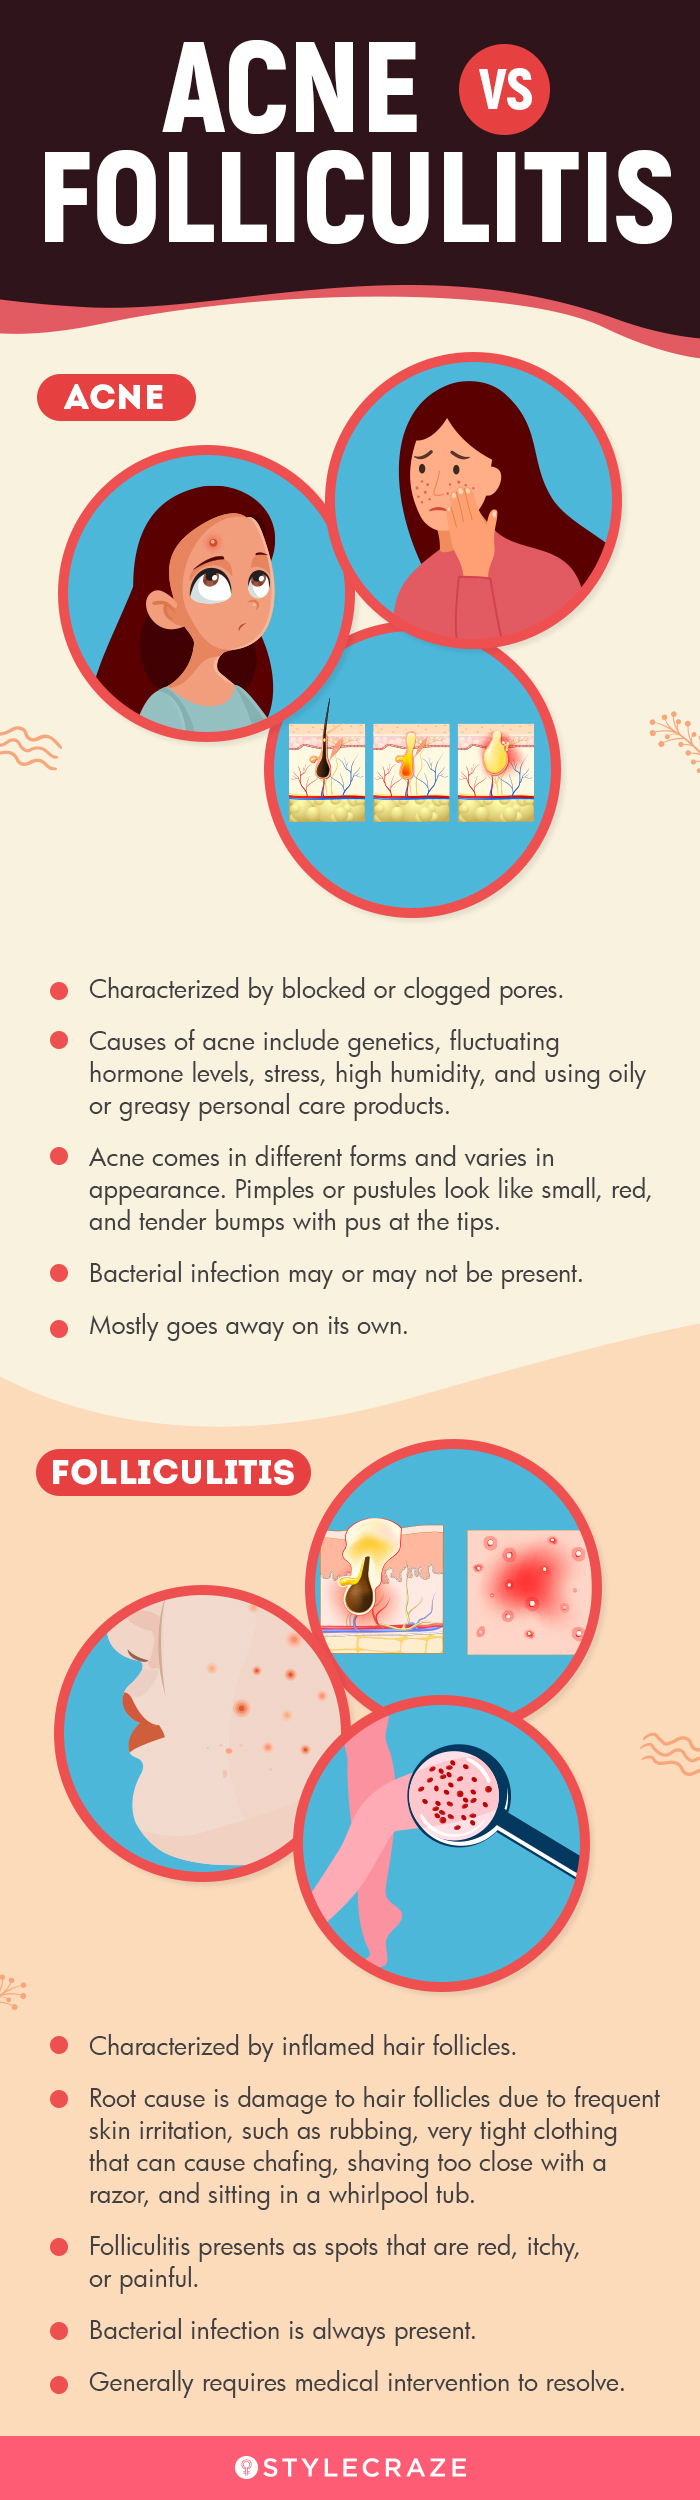 acne vs folliculitis [infographic]